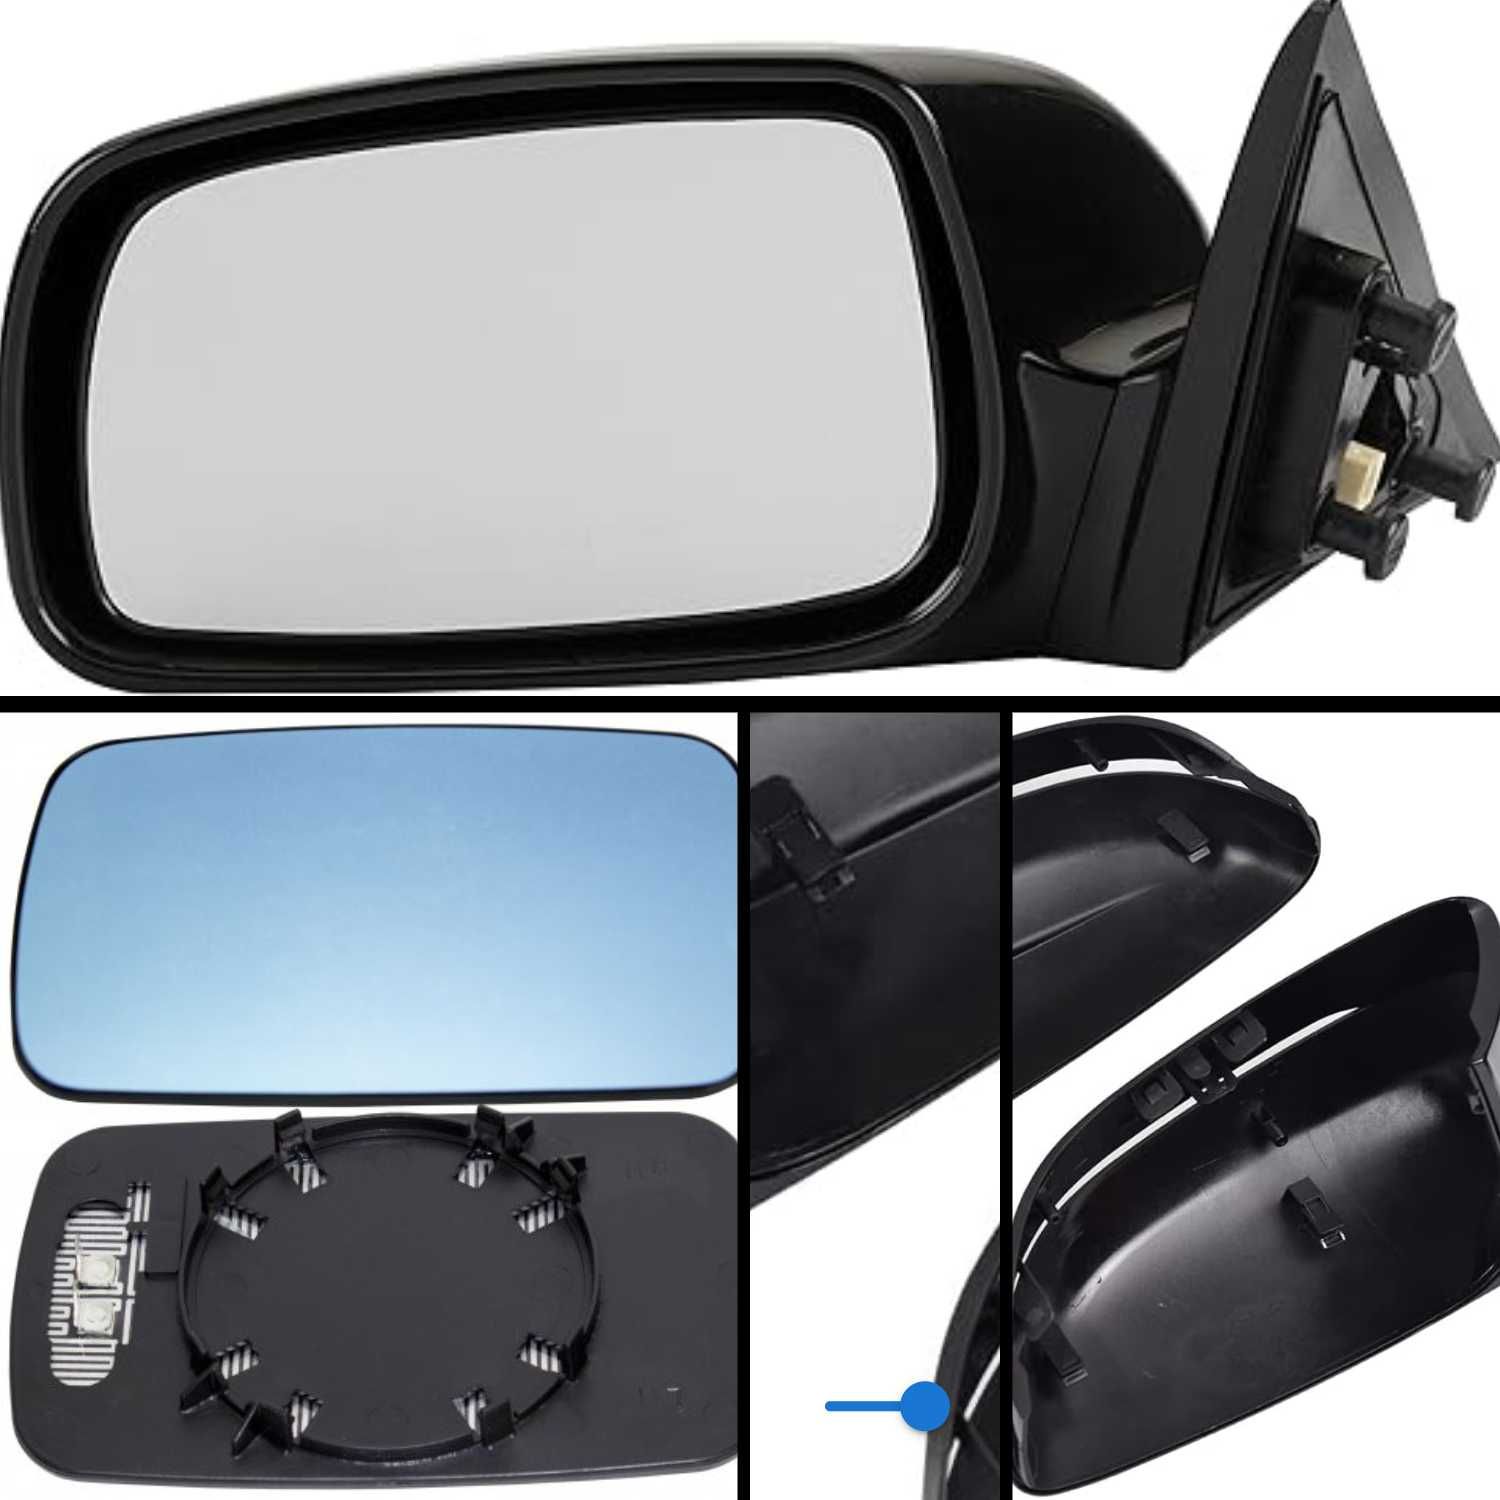 Странични огледала , за всички модели автомобили и стъкла огледало.